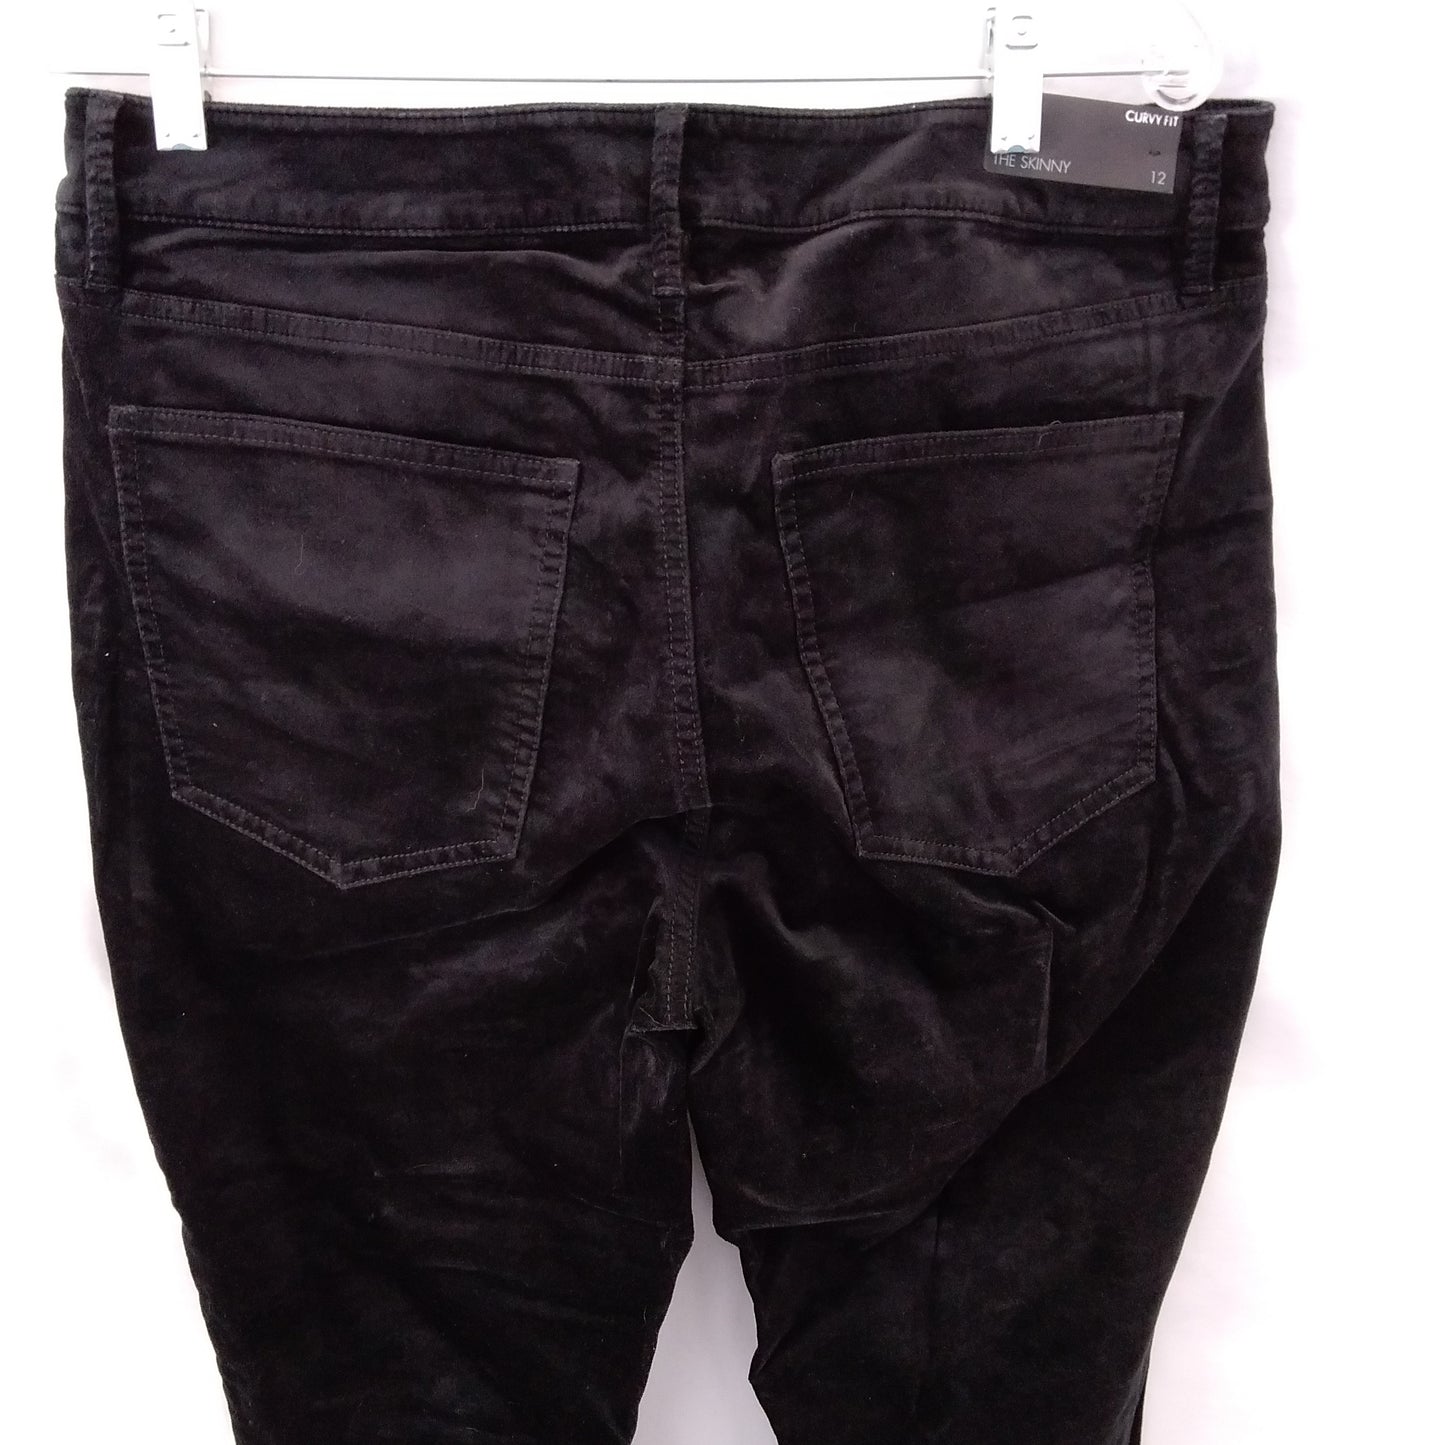 NWT - Ann Taylor The Skinny Curvy Fit Black Denim Jeans - Size: 12